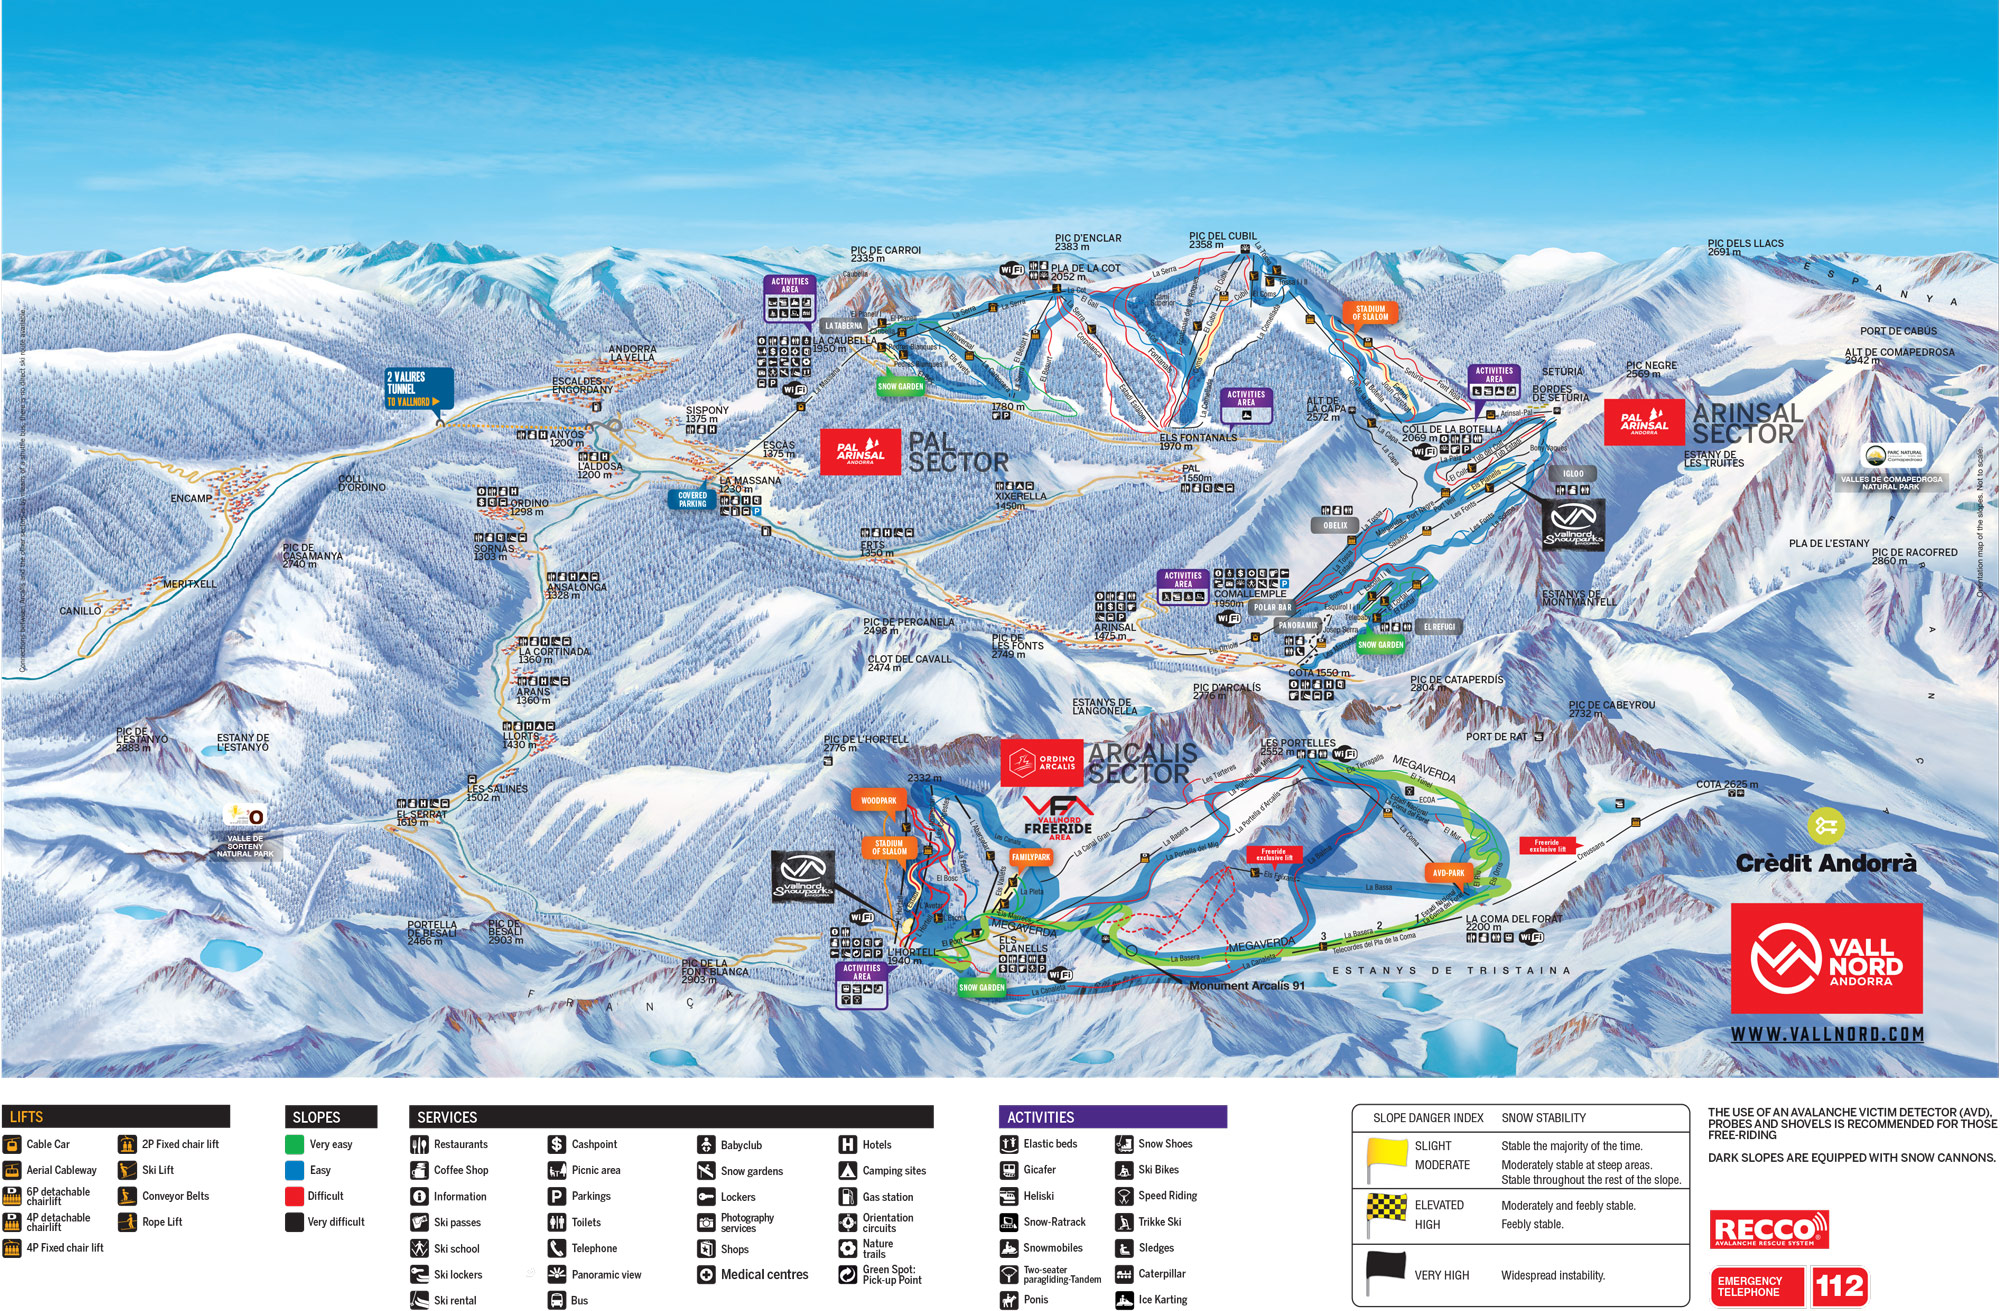 Ski resorts in Andorra - Ski resort statistics.